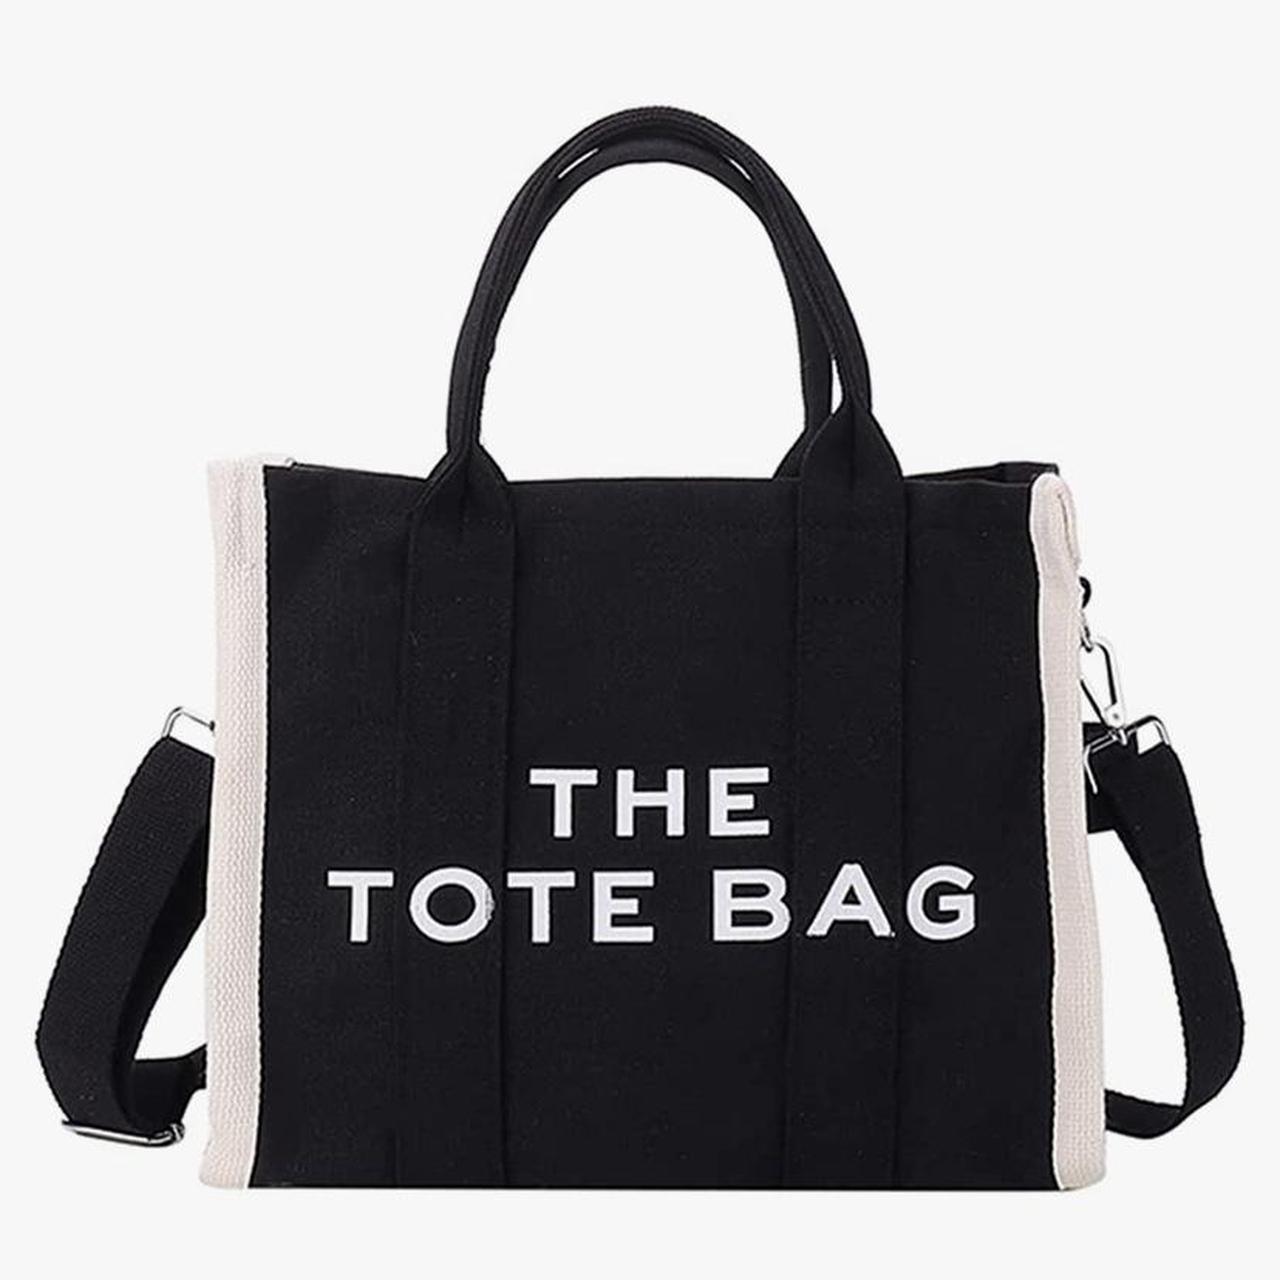 The Tote Bag square bag in black & cream too. Just... - Depop